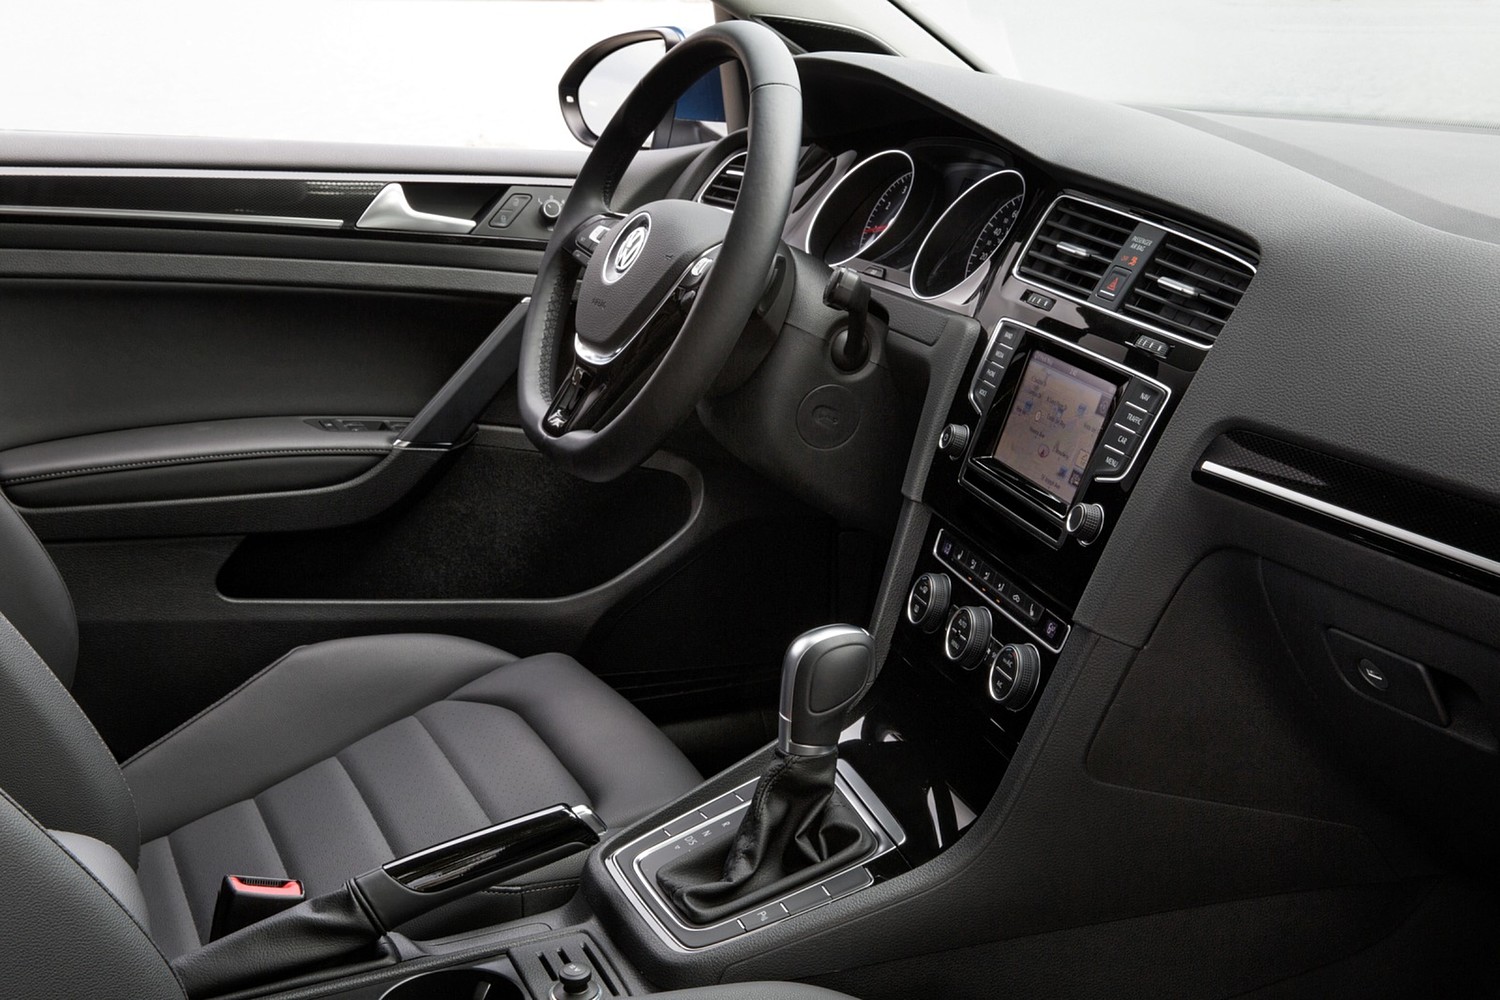 Volkswagen Golf SportWagen TSI SEL Wagon Interior (2015 model year shown)